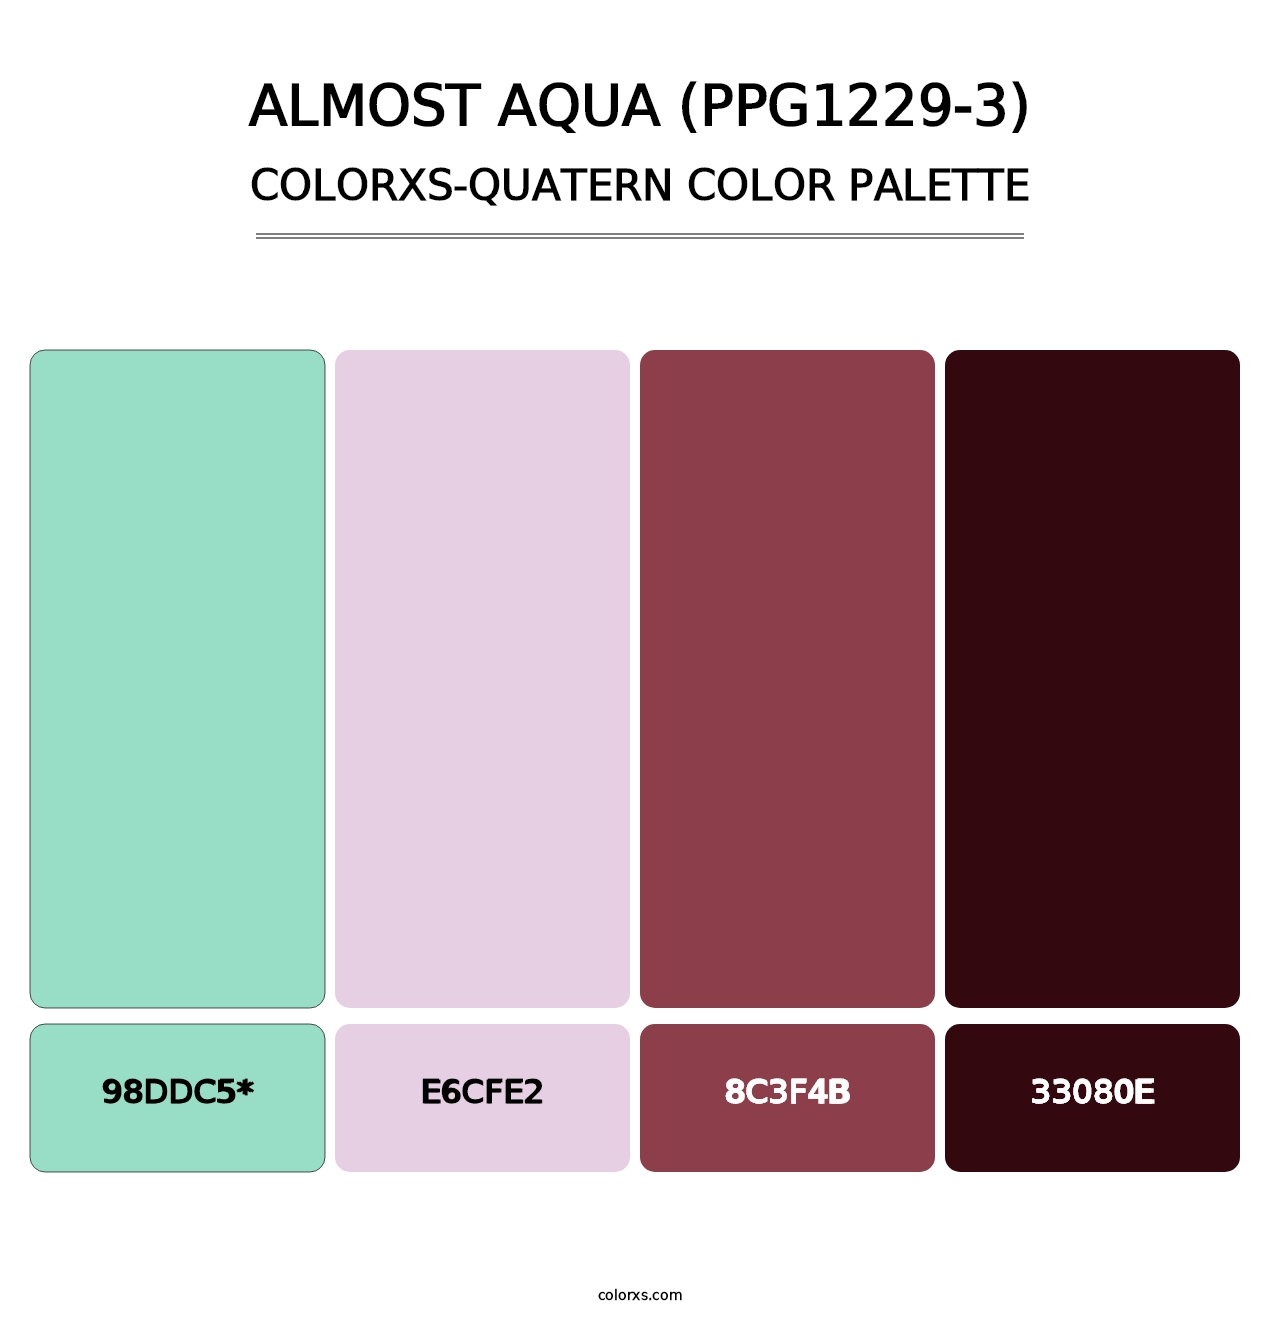 Almost Aqua (PPG1229-3) - Colorxs Quatern Palette